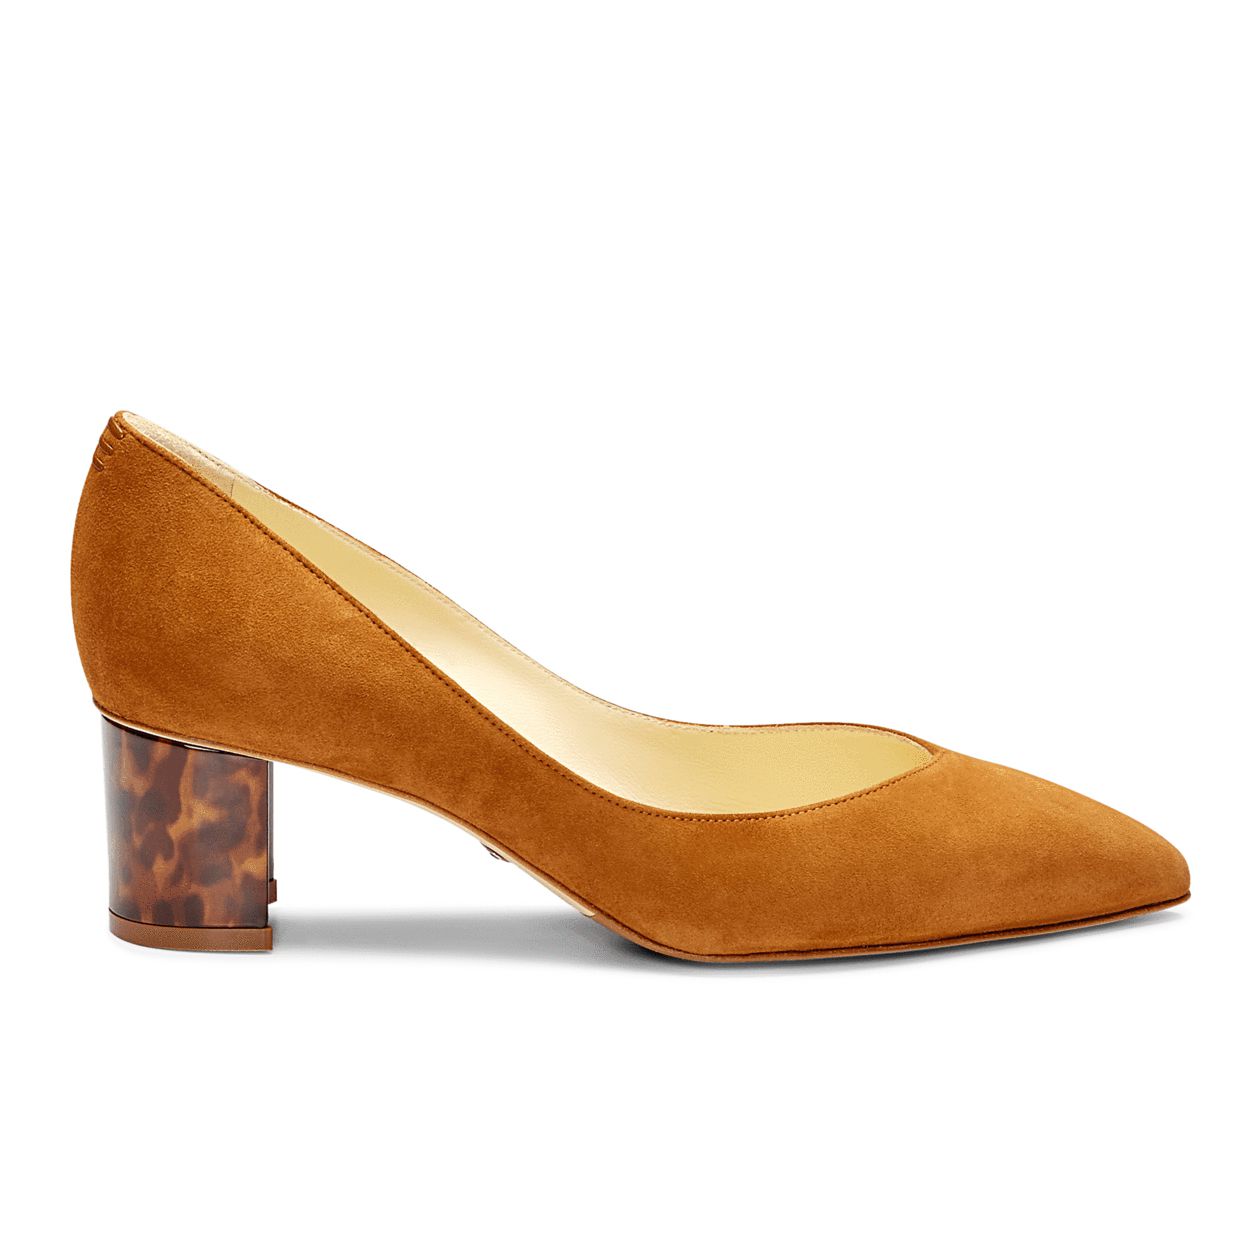 Meghan Markle's Favorite Sarah Flint Shoes on Sale Now | PEOPLE.com